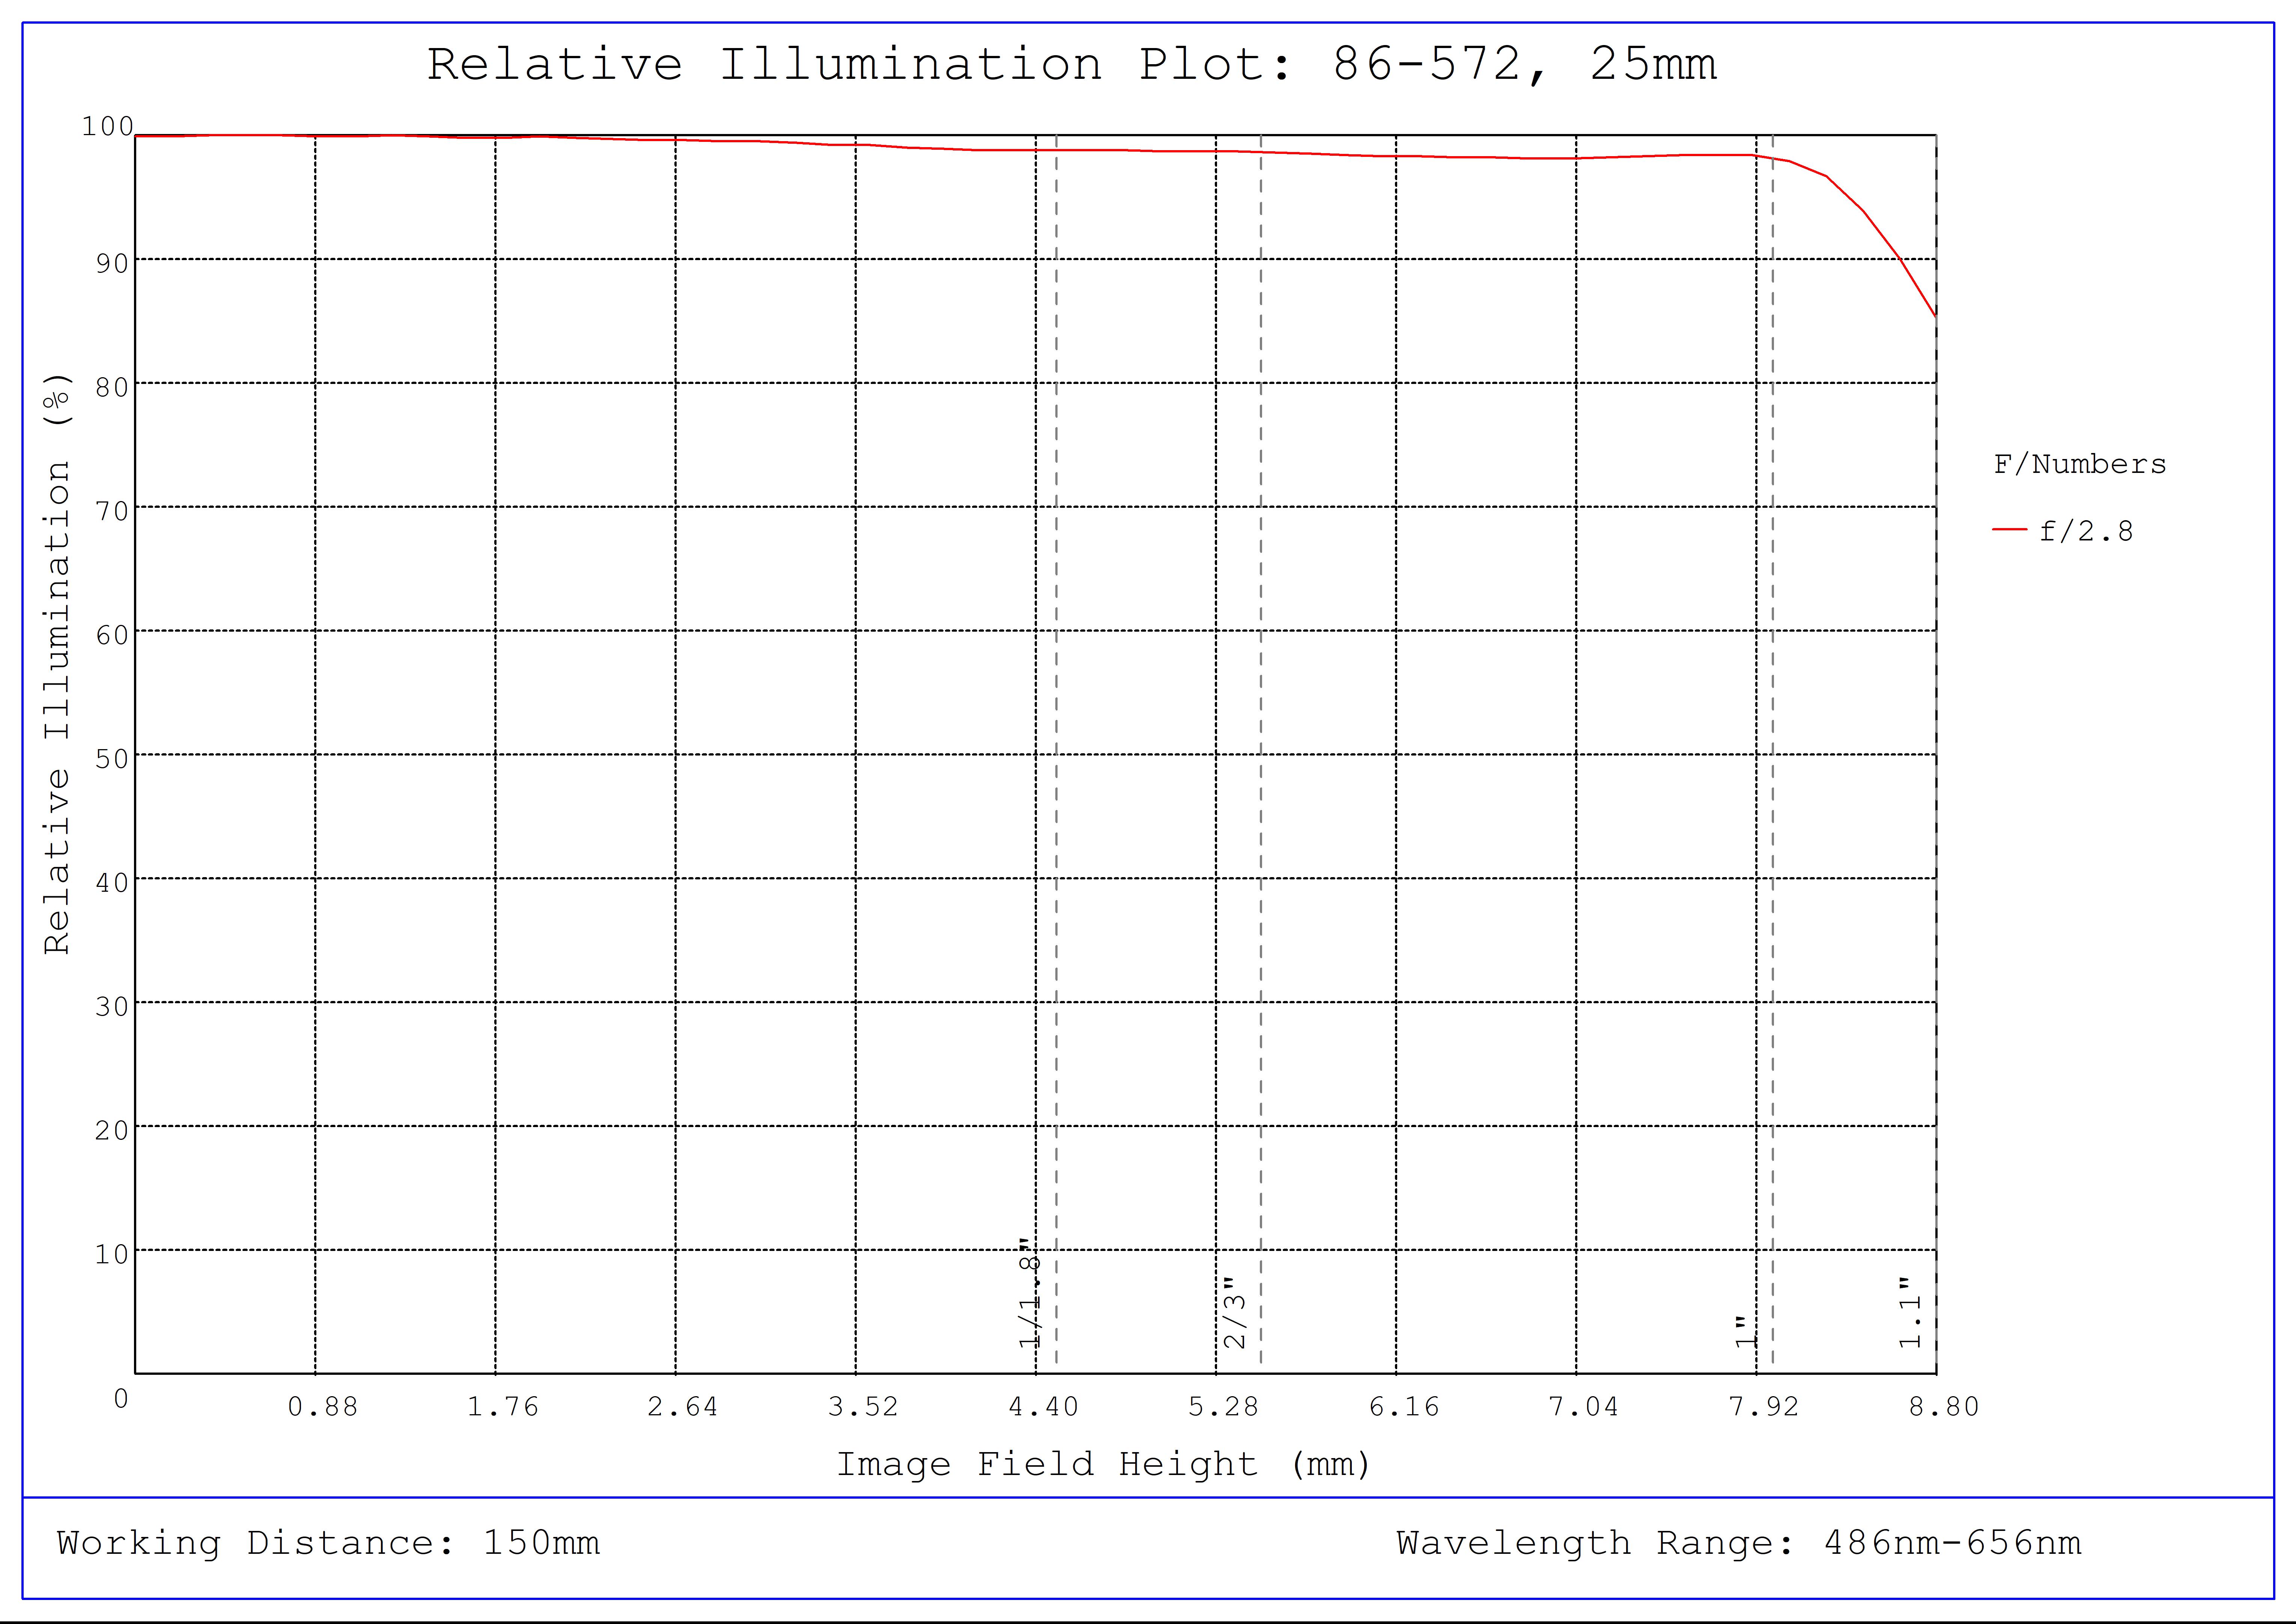 #86-572, 25mm Focal Length, HP Series Fixed Focal Length Lens, Relative Illumination Plot